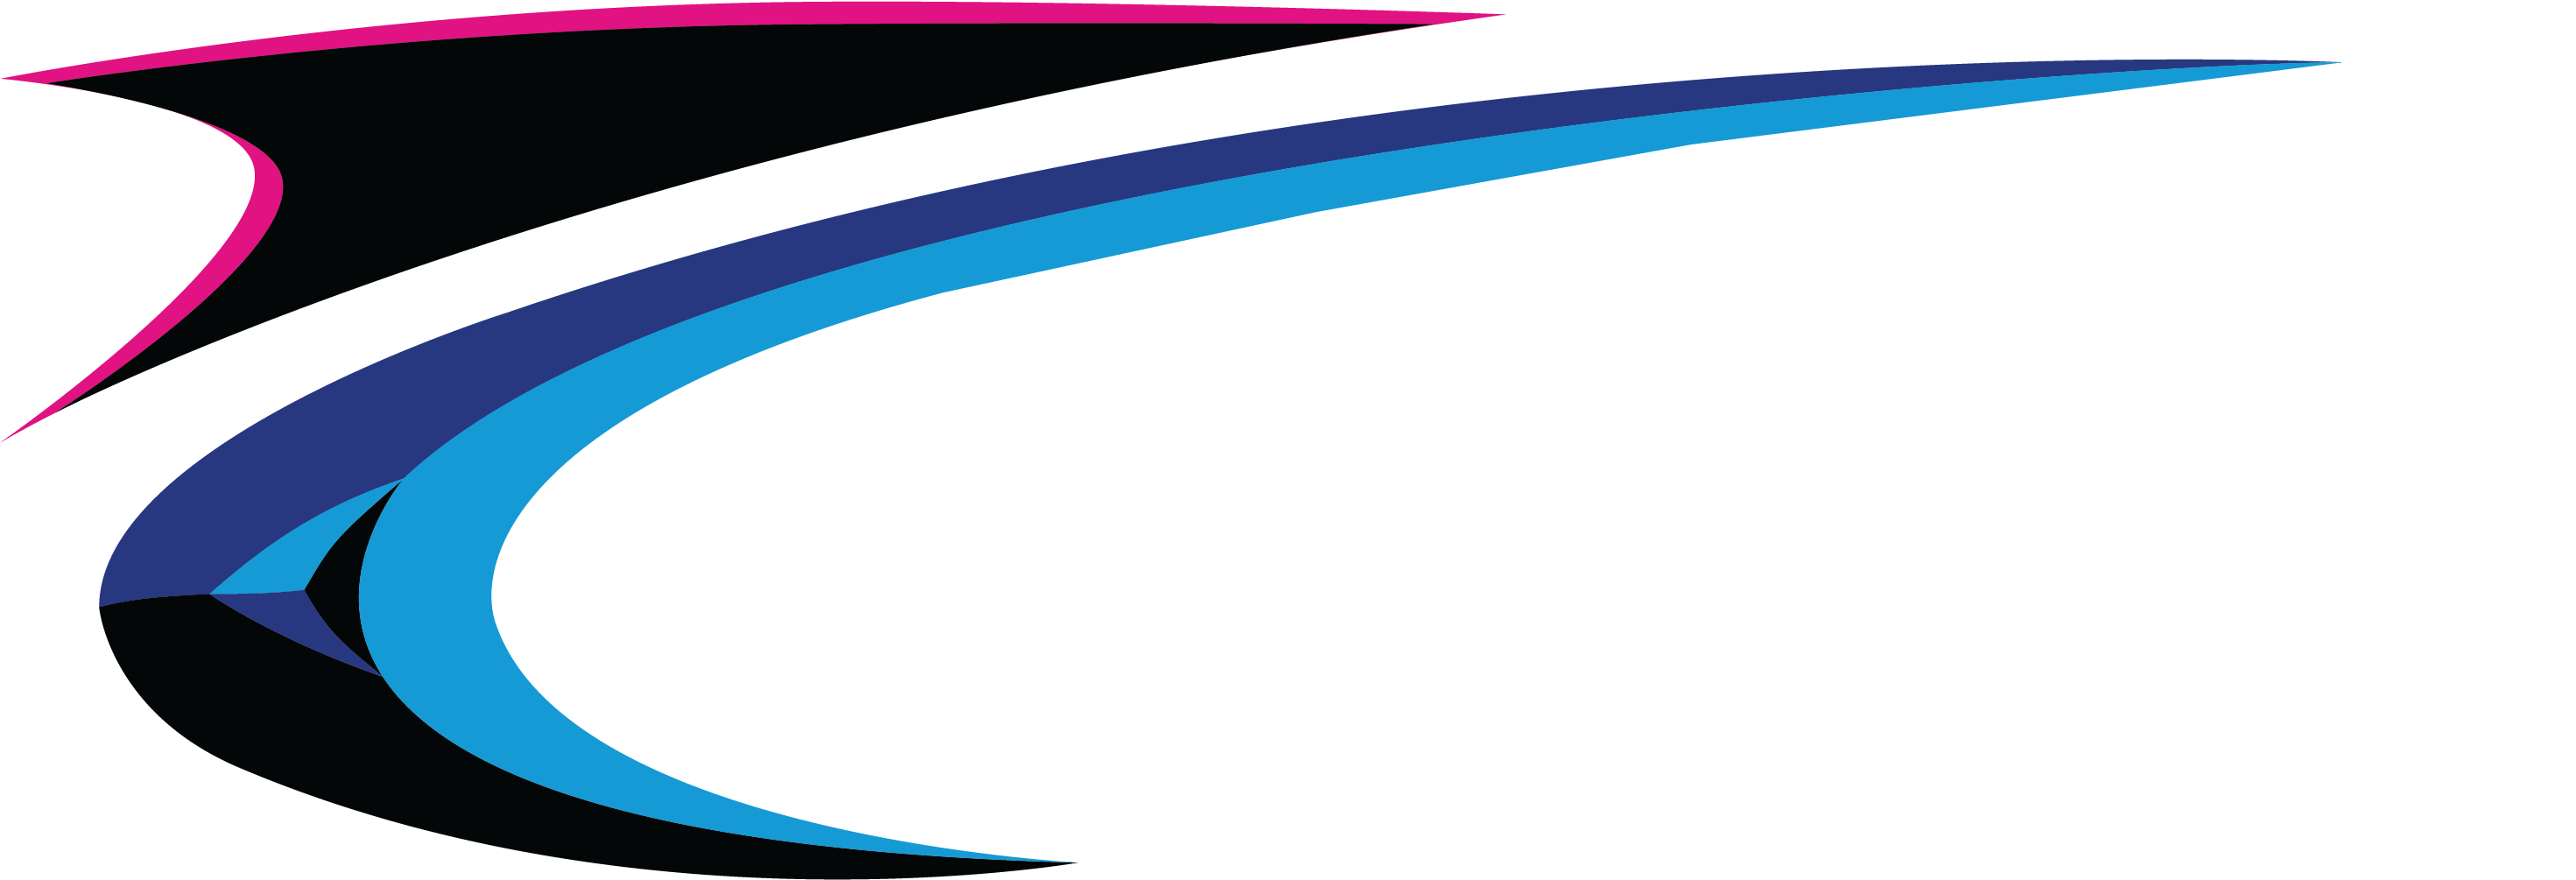 Subie Challenge Series - Circle (3300x1196)